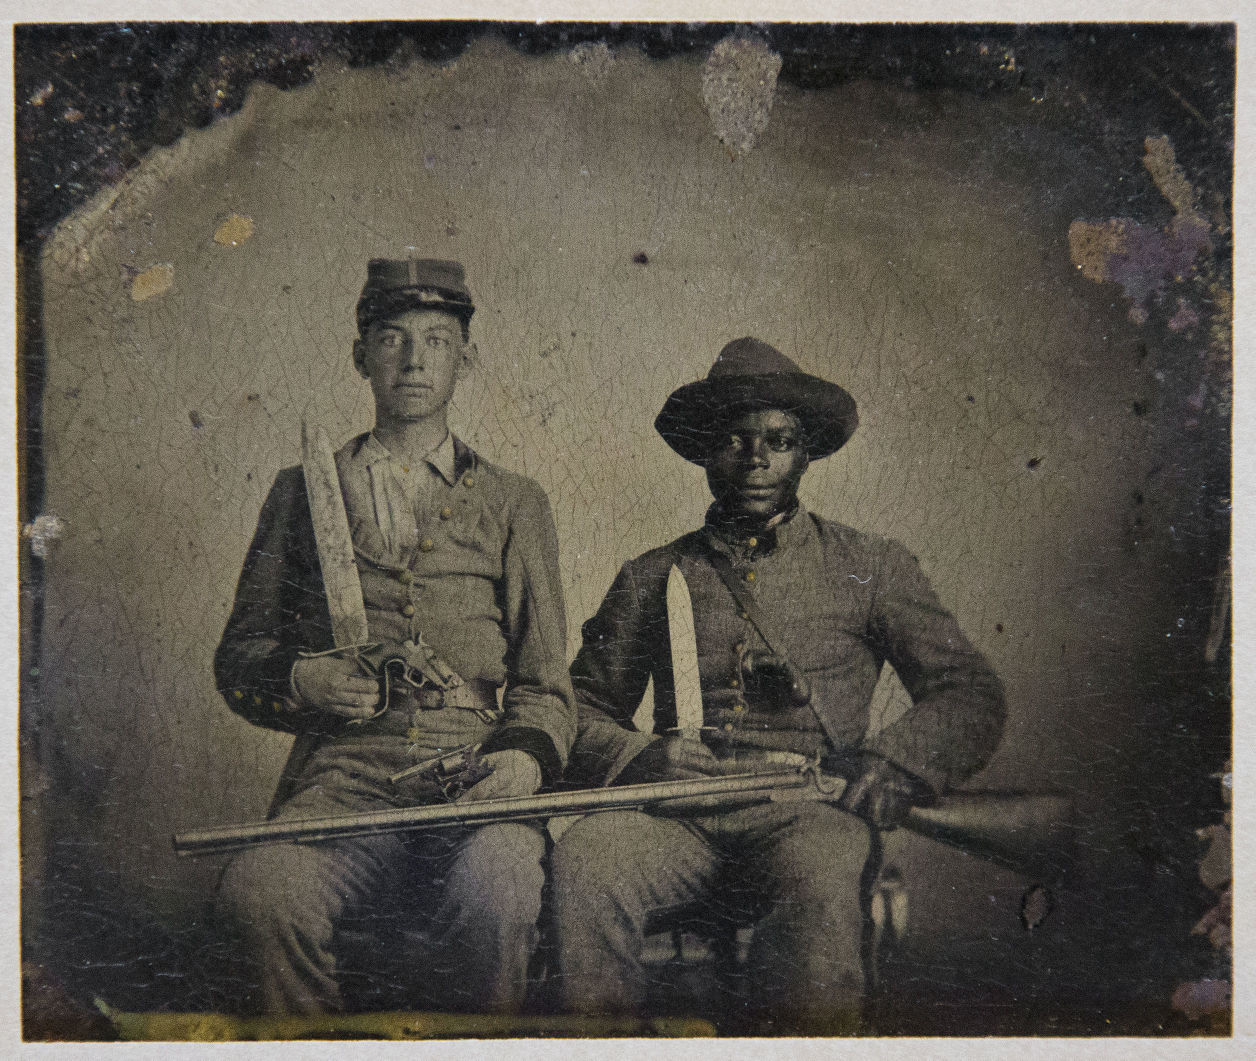 black soldiers in navy during civil war